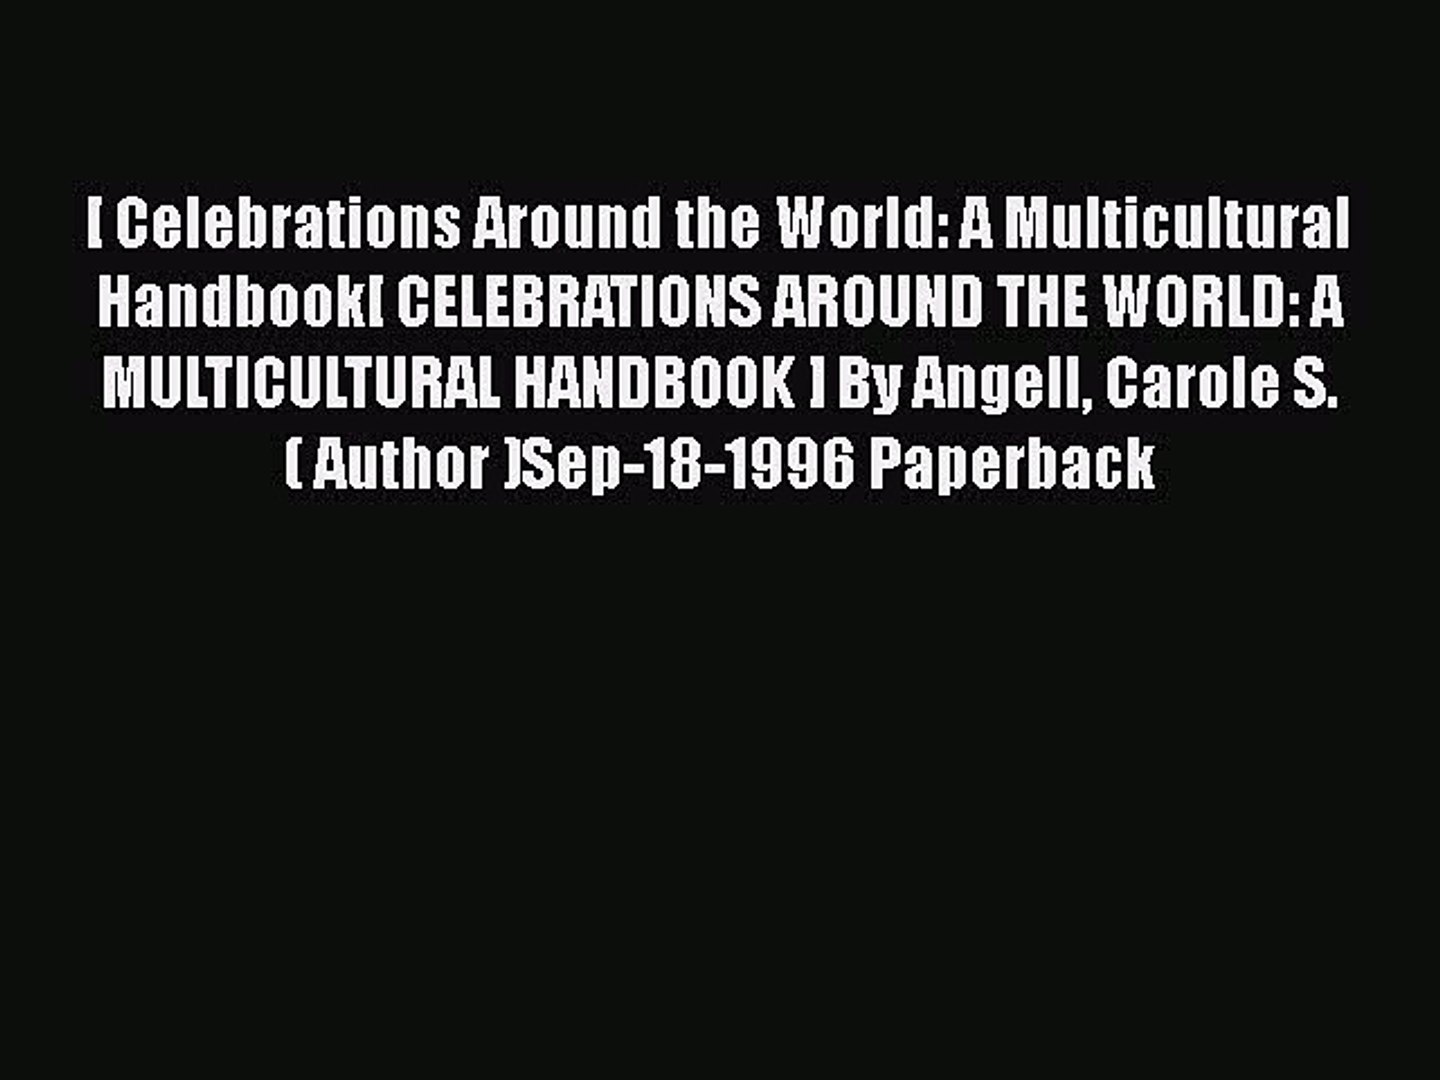 Book [ Celebrations Around the World: A Multicultural Handbook[ CELEBRATIONS AROUND THE WORLD: